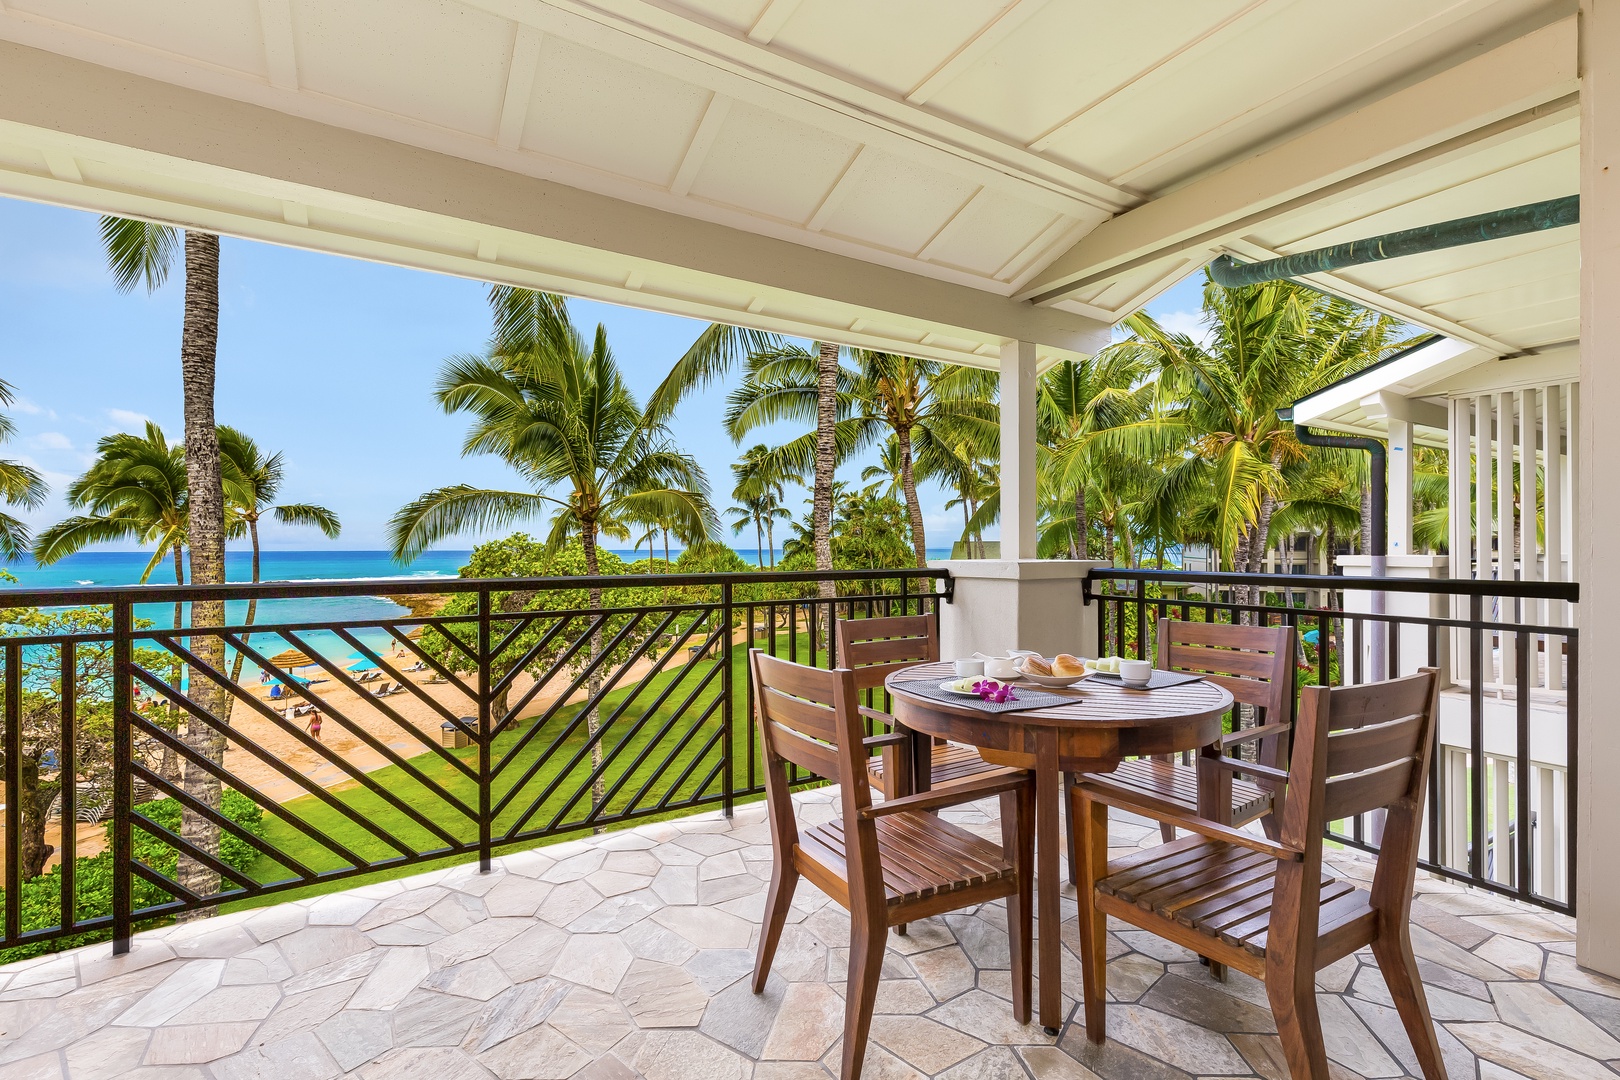 Kahuku Vacation Rentals, Turtle Bay Villas 301 - Experience ultimate Hawaiian getaway luxury at our 3rd-floor, recently refurbished Villa 301